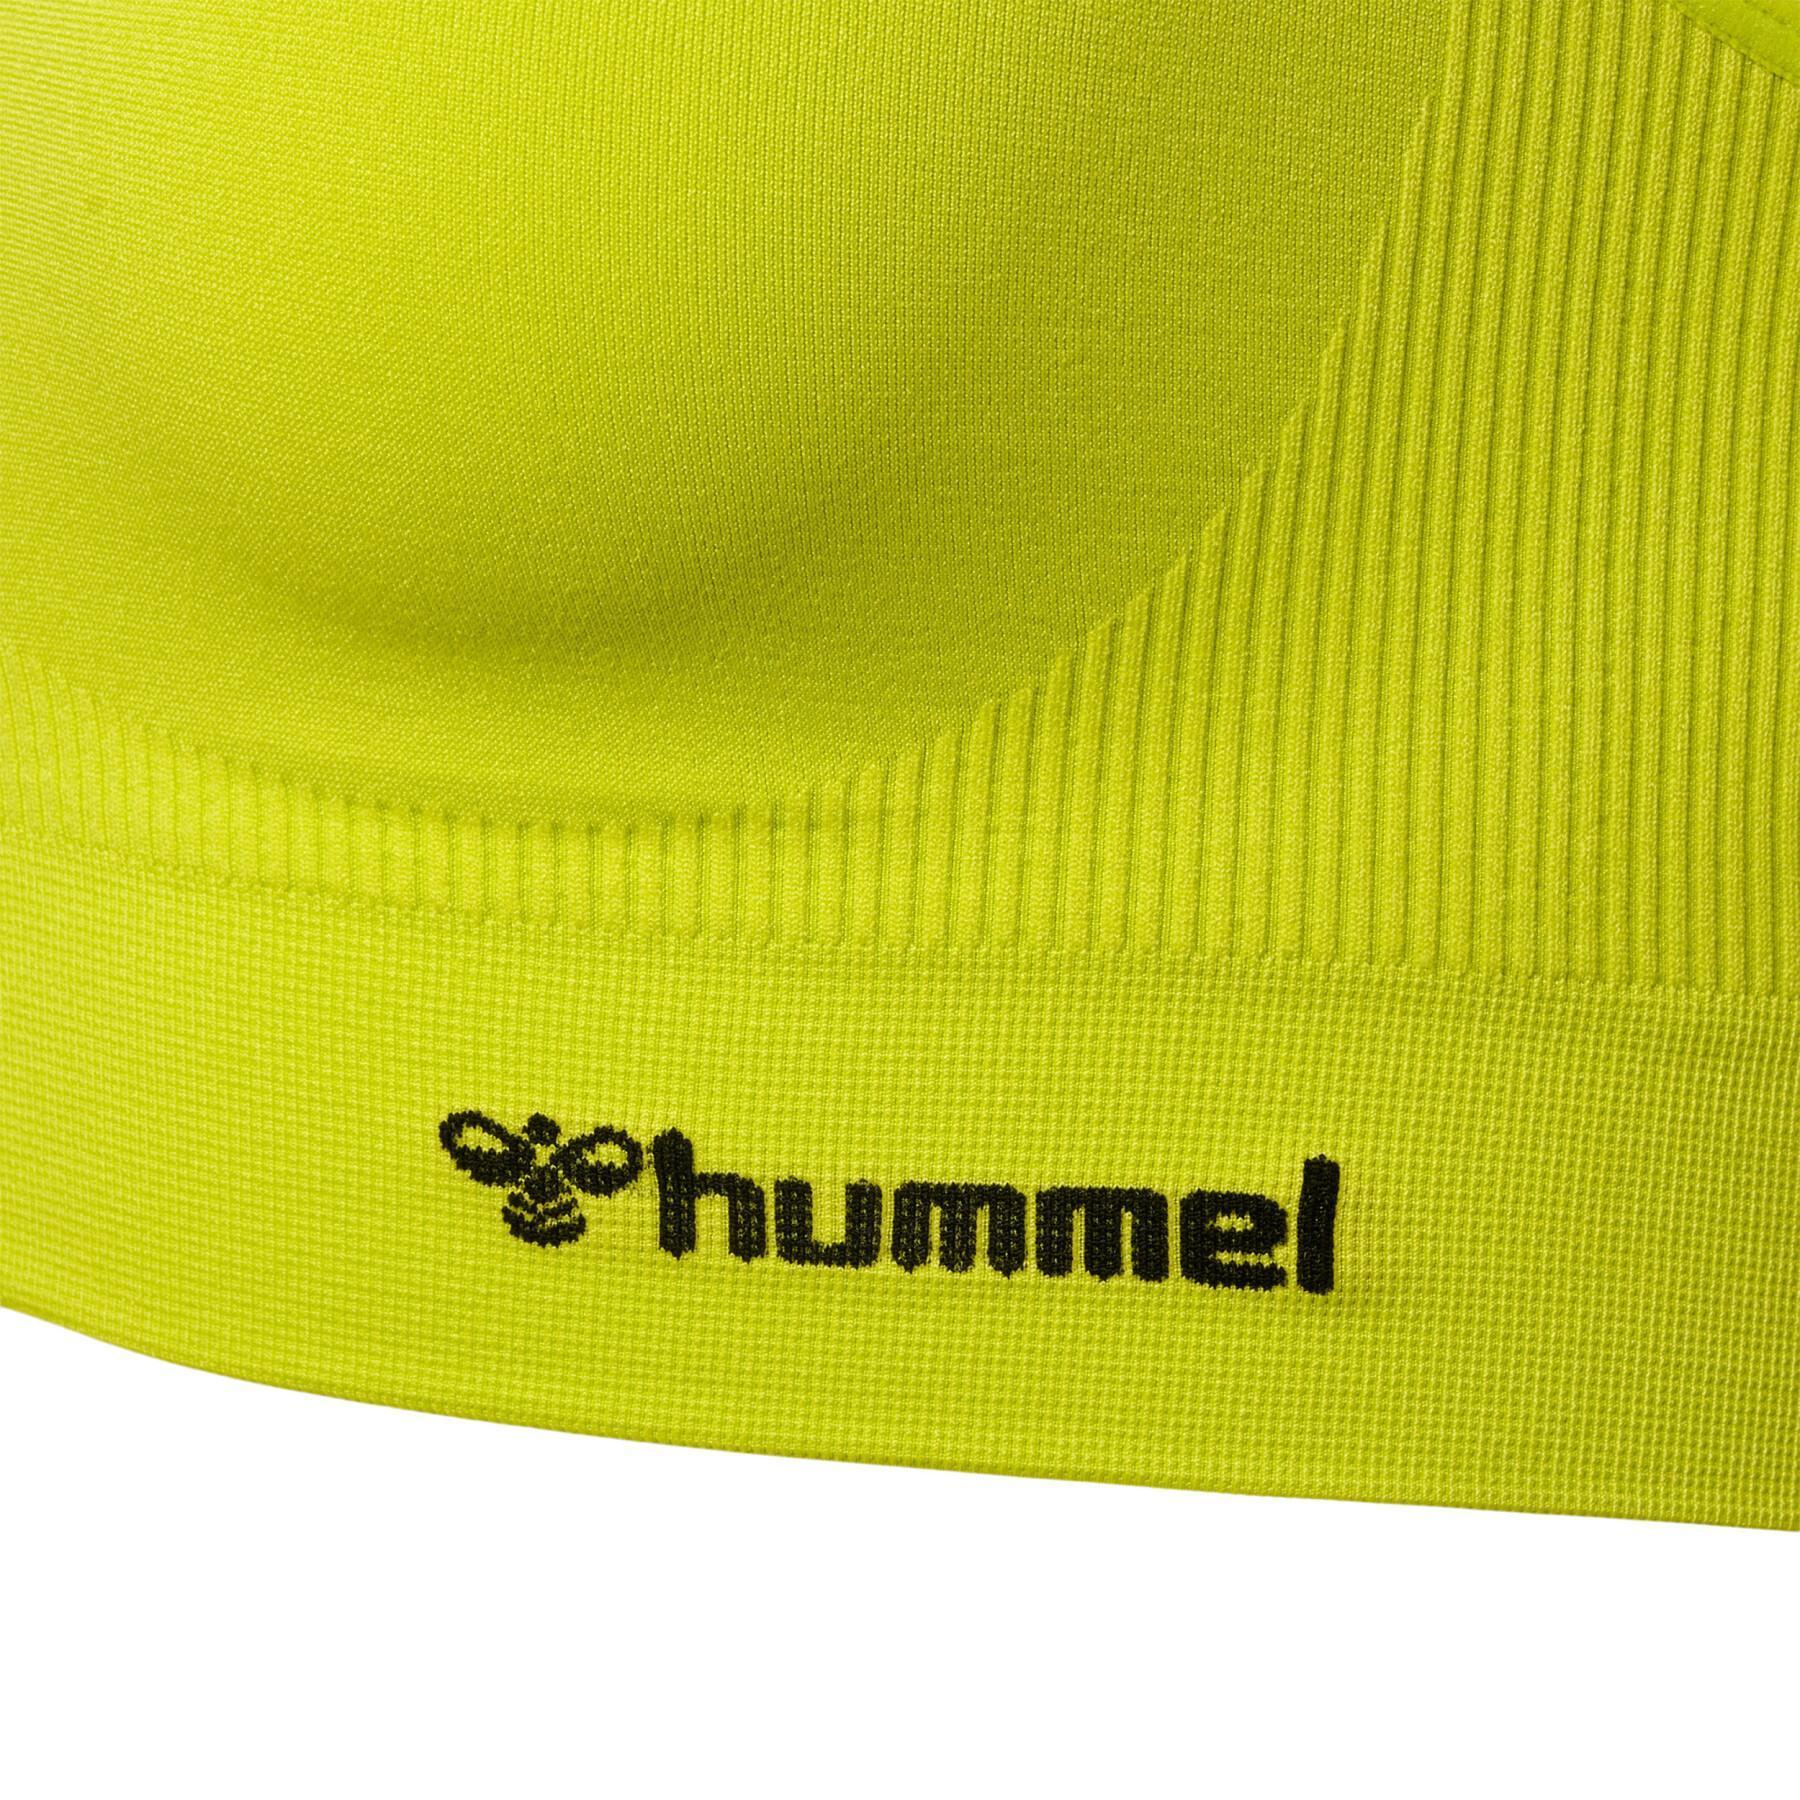 Seamless bra for women Hummel TIF